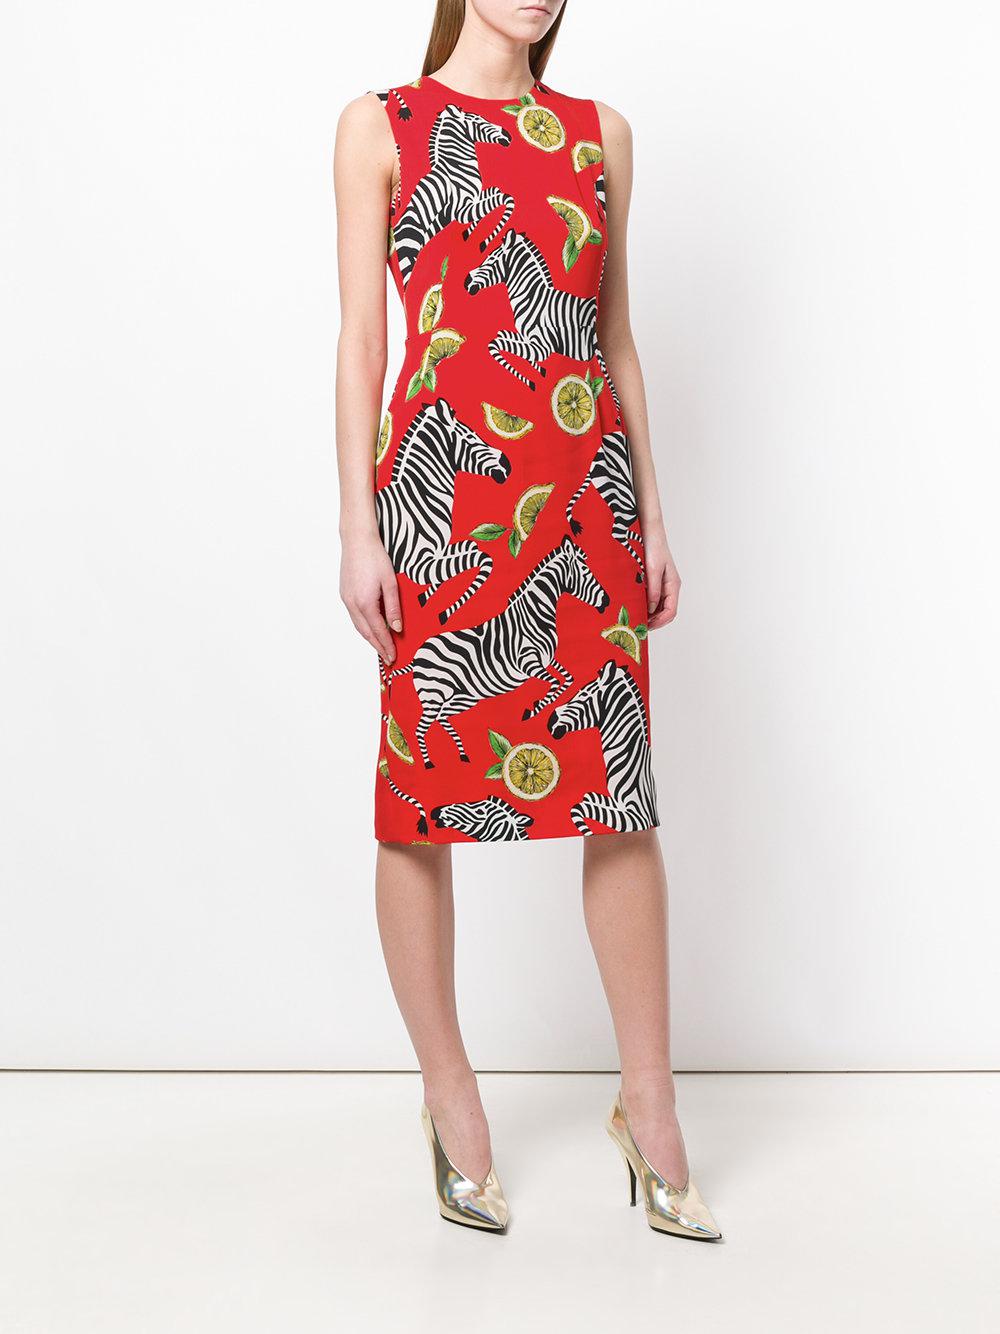 Dolce & Gabbana Zebra And Lemon Print Dress in Red | Lyst